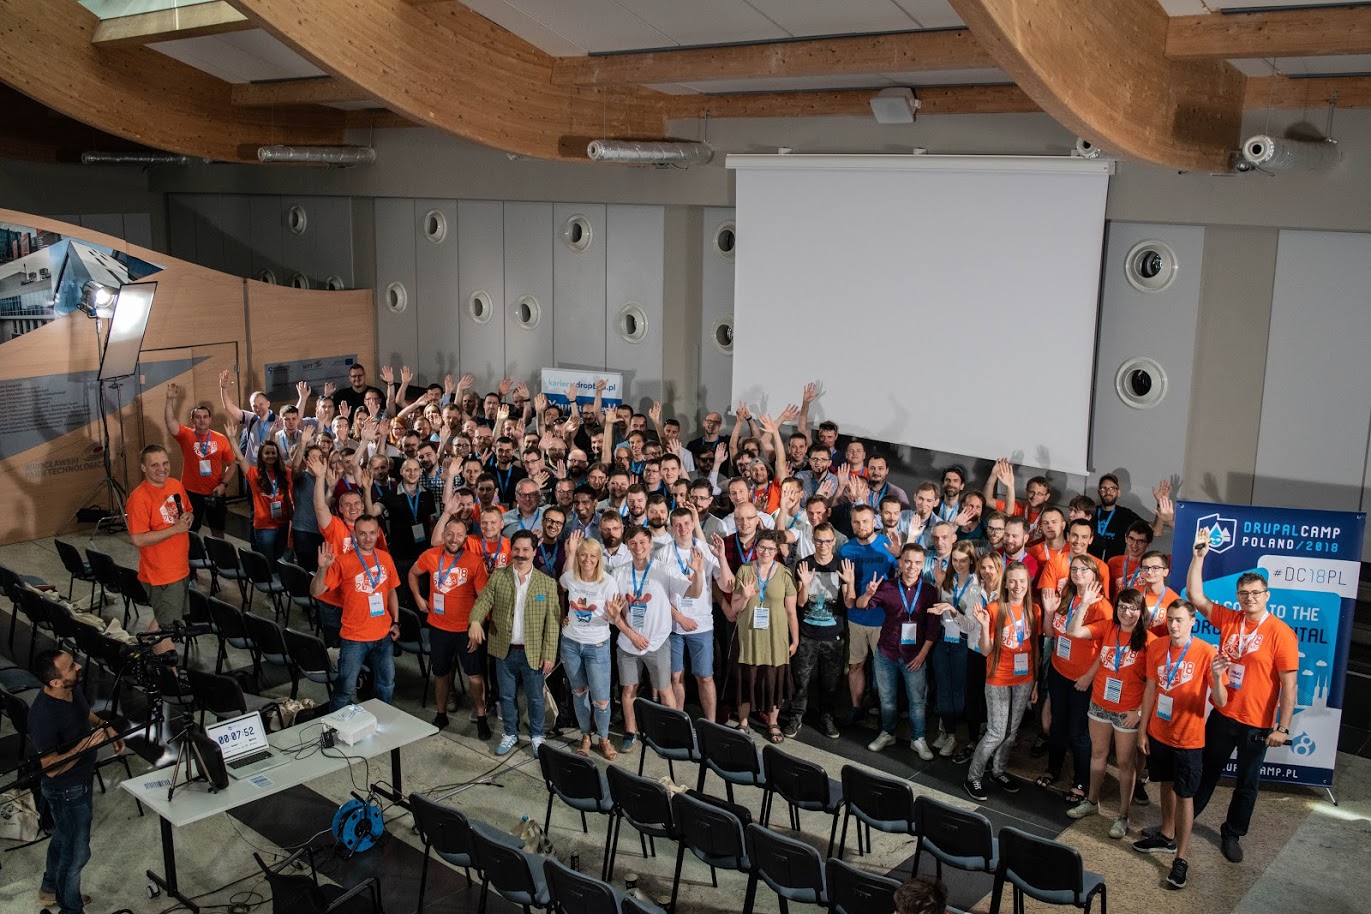 DrupalCamp Poland 2018 attendees.